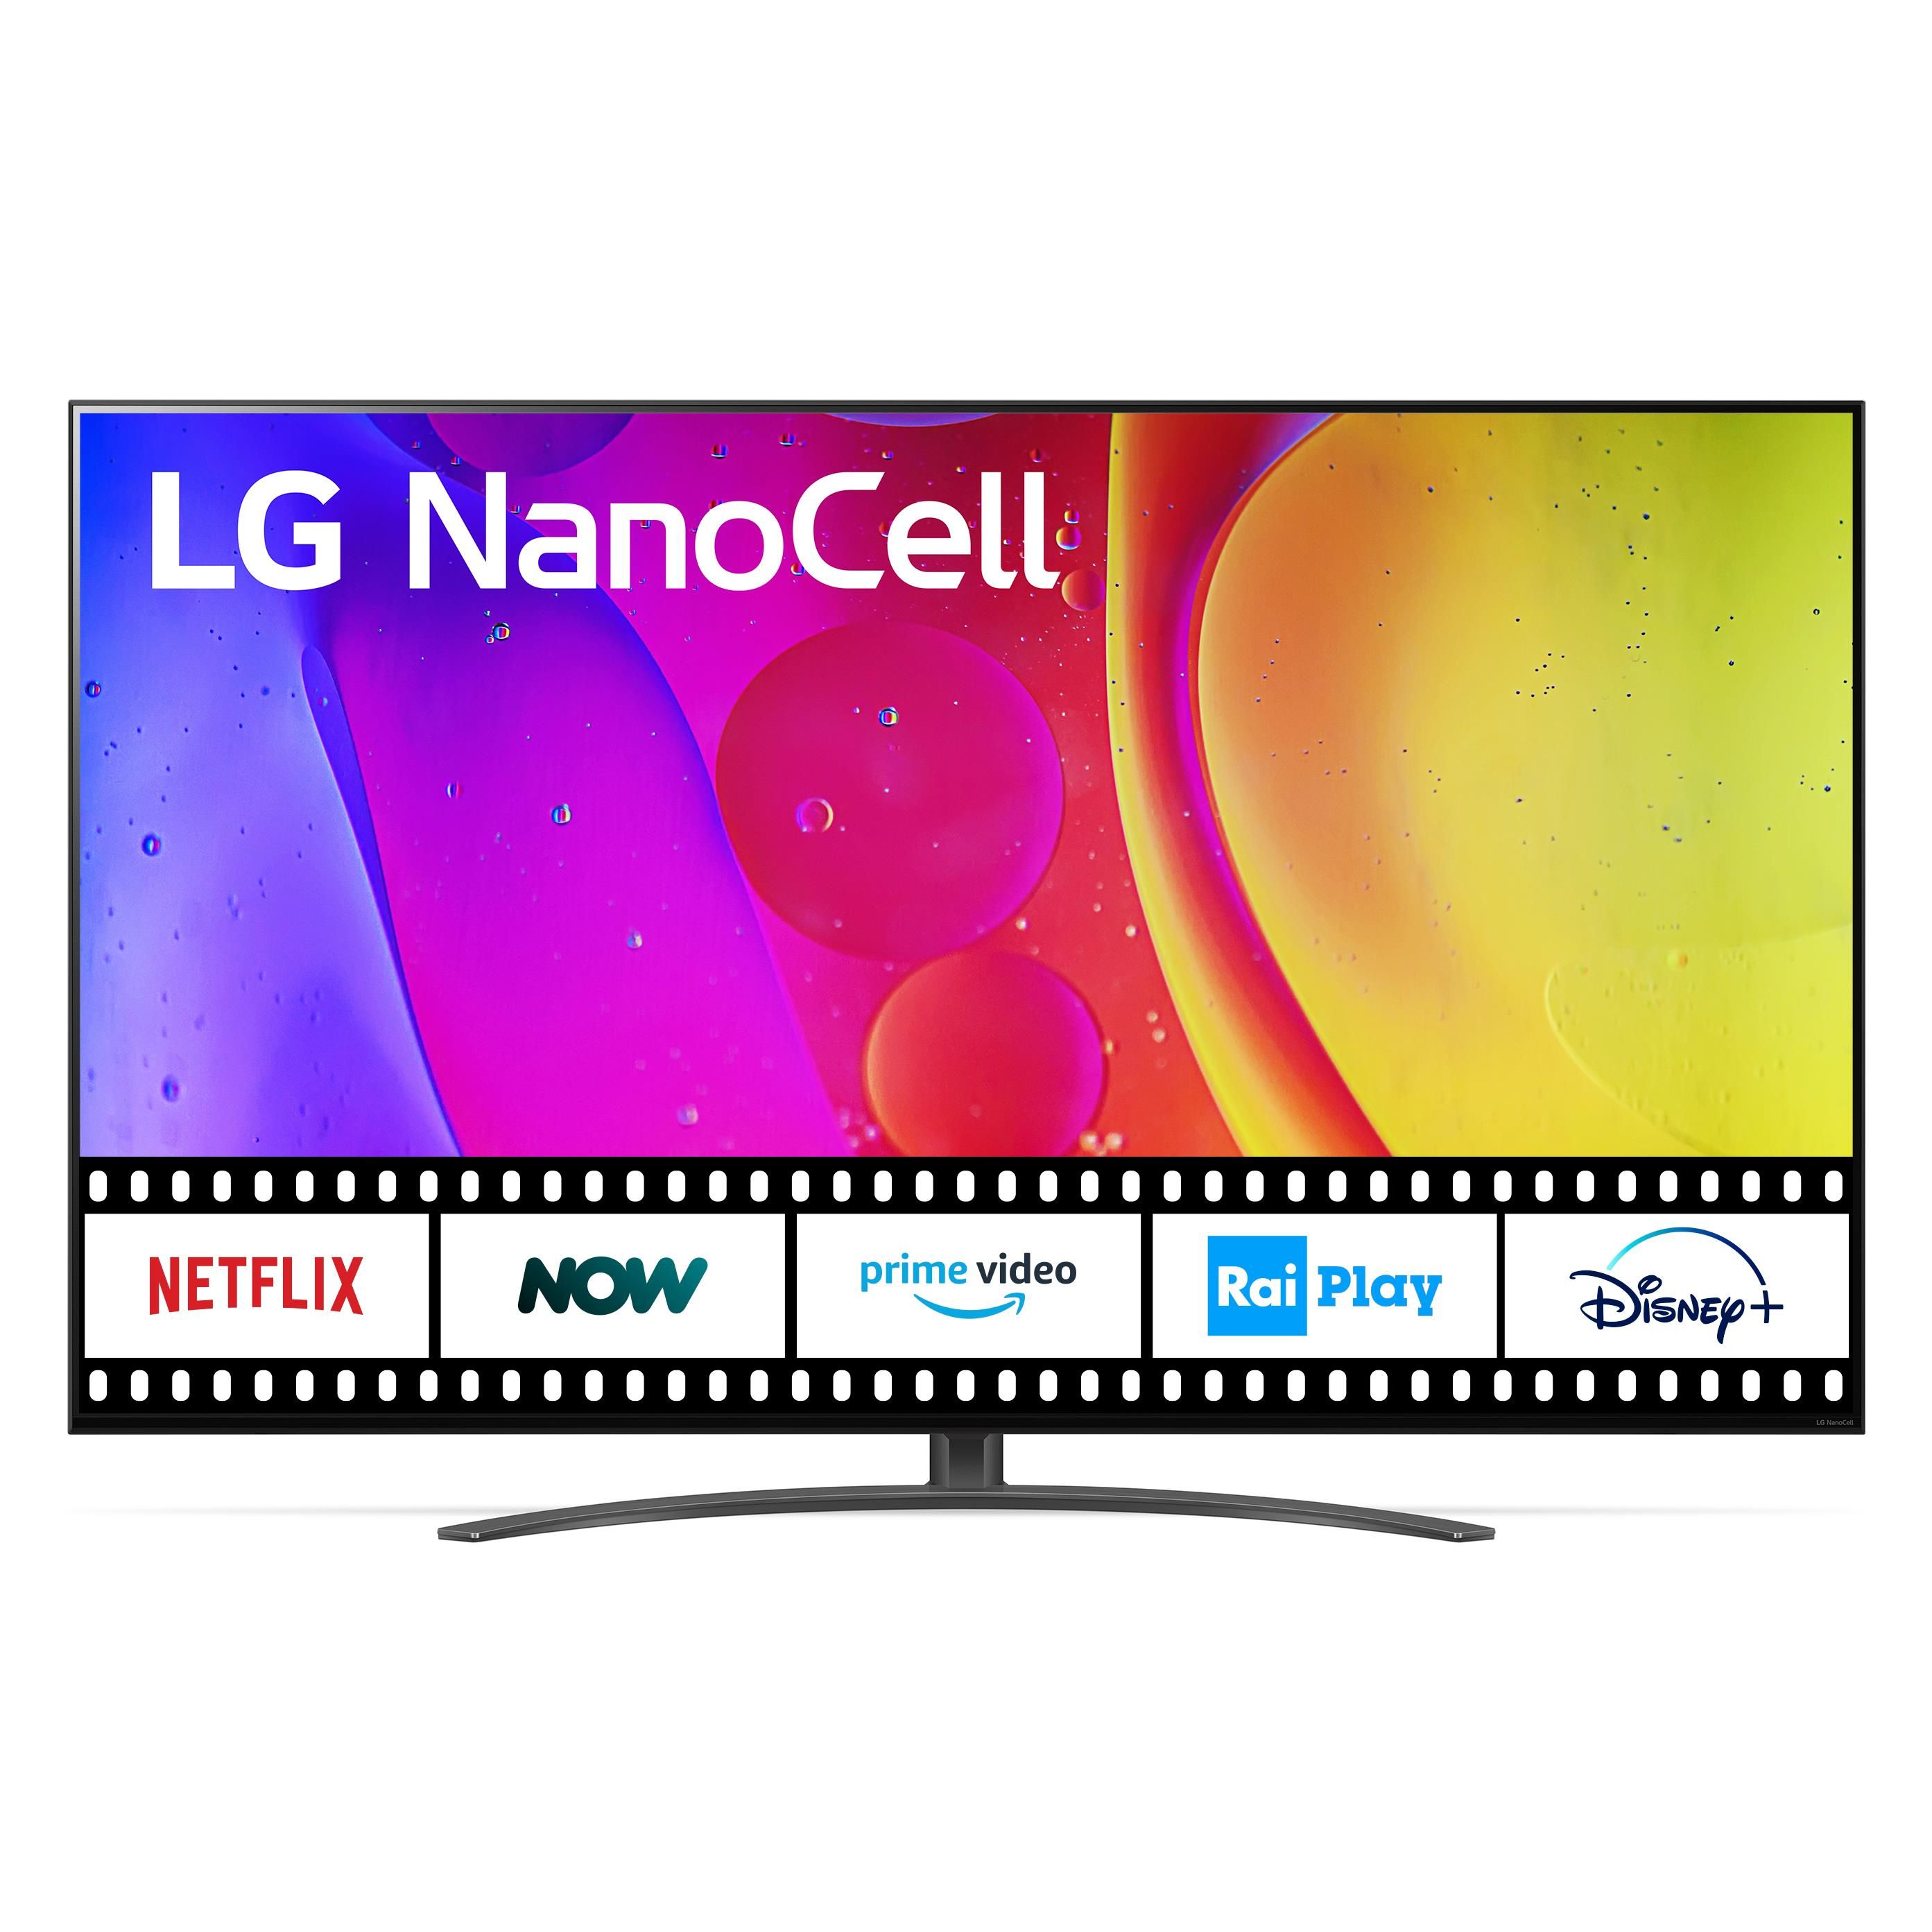 LG NanoCell Tv 75